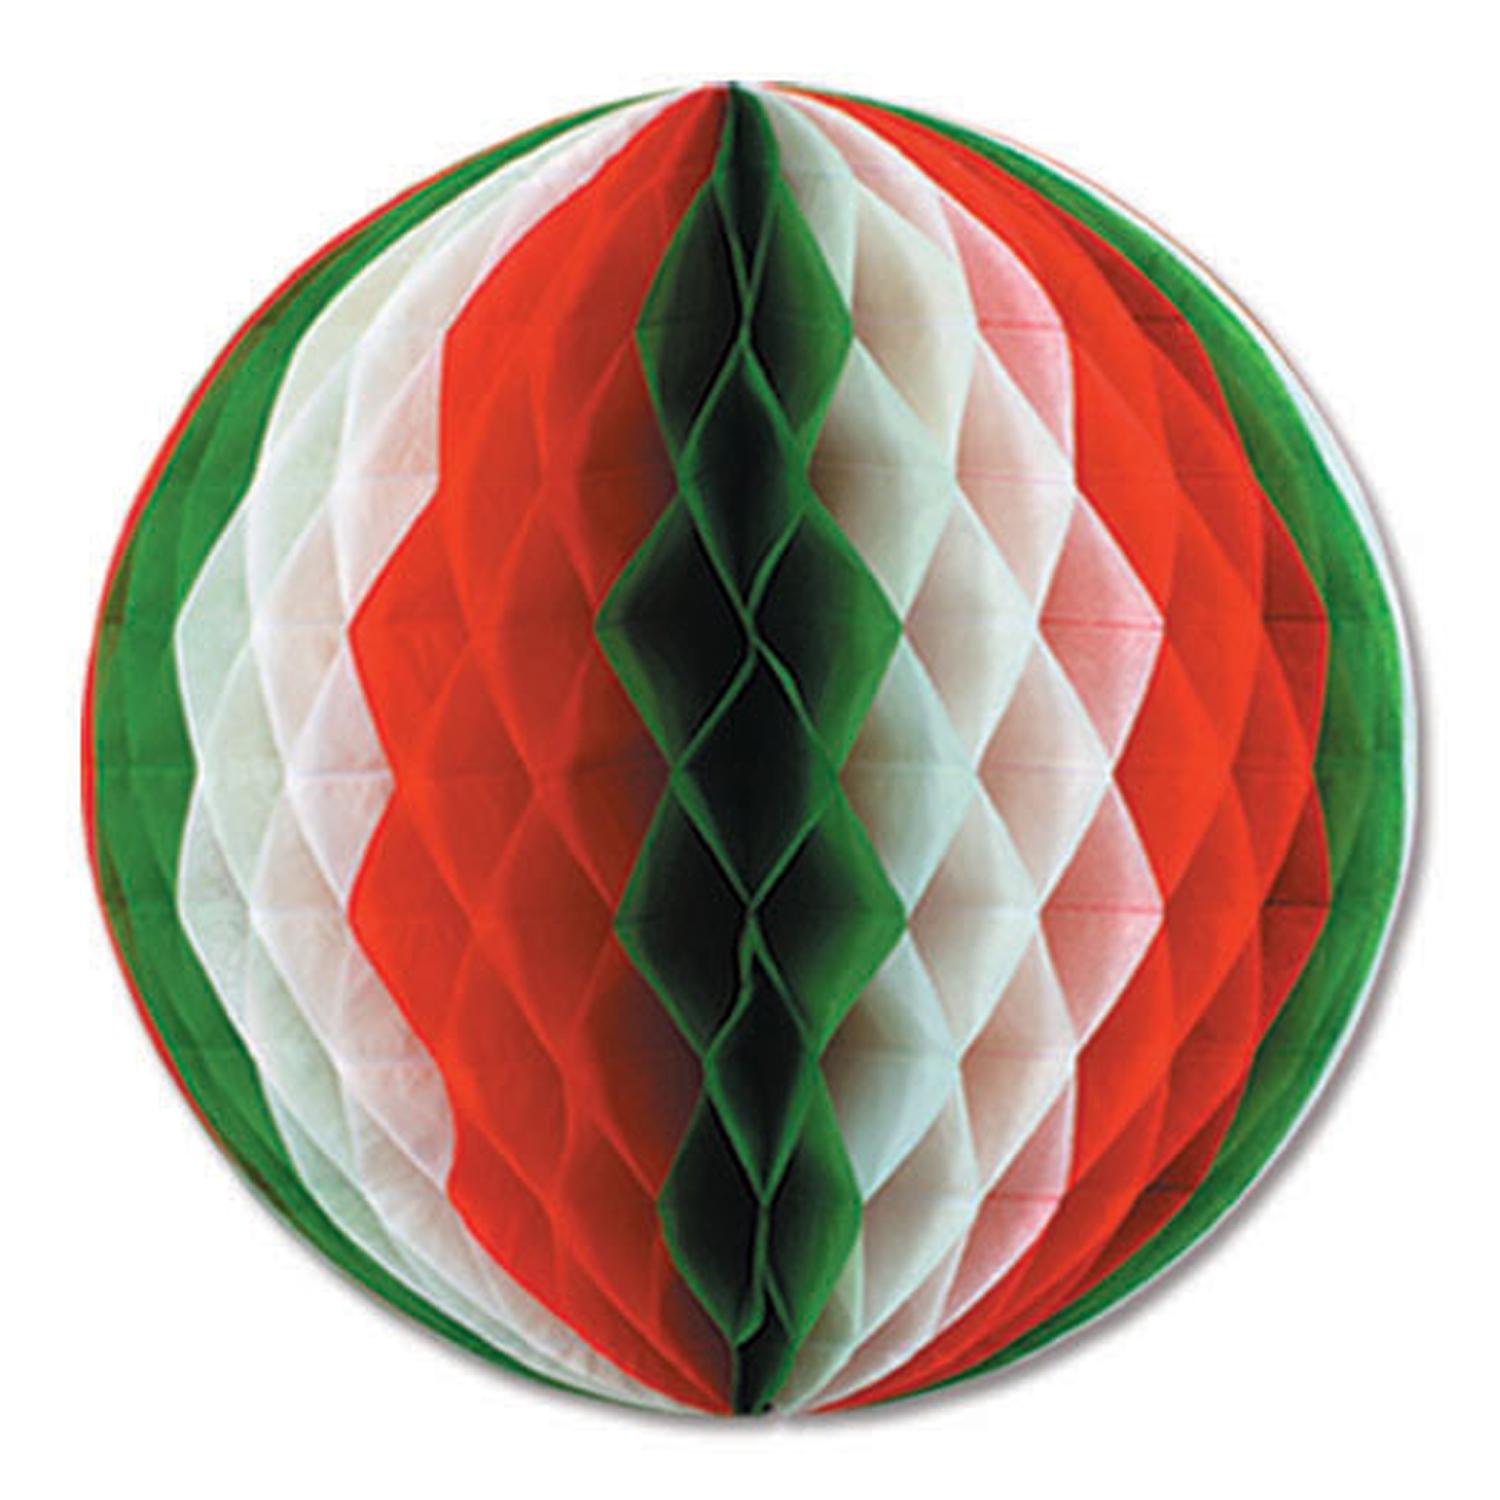 Beistle Fiesta Packaged Tissue Ball - red - white - green